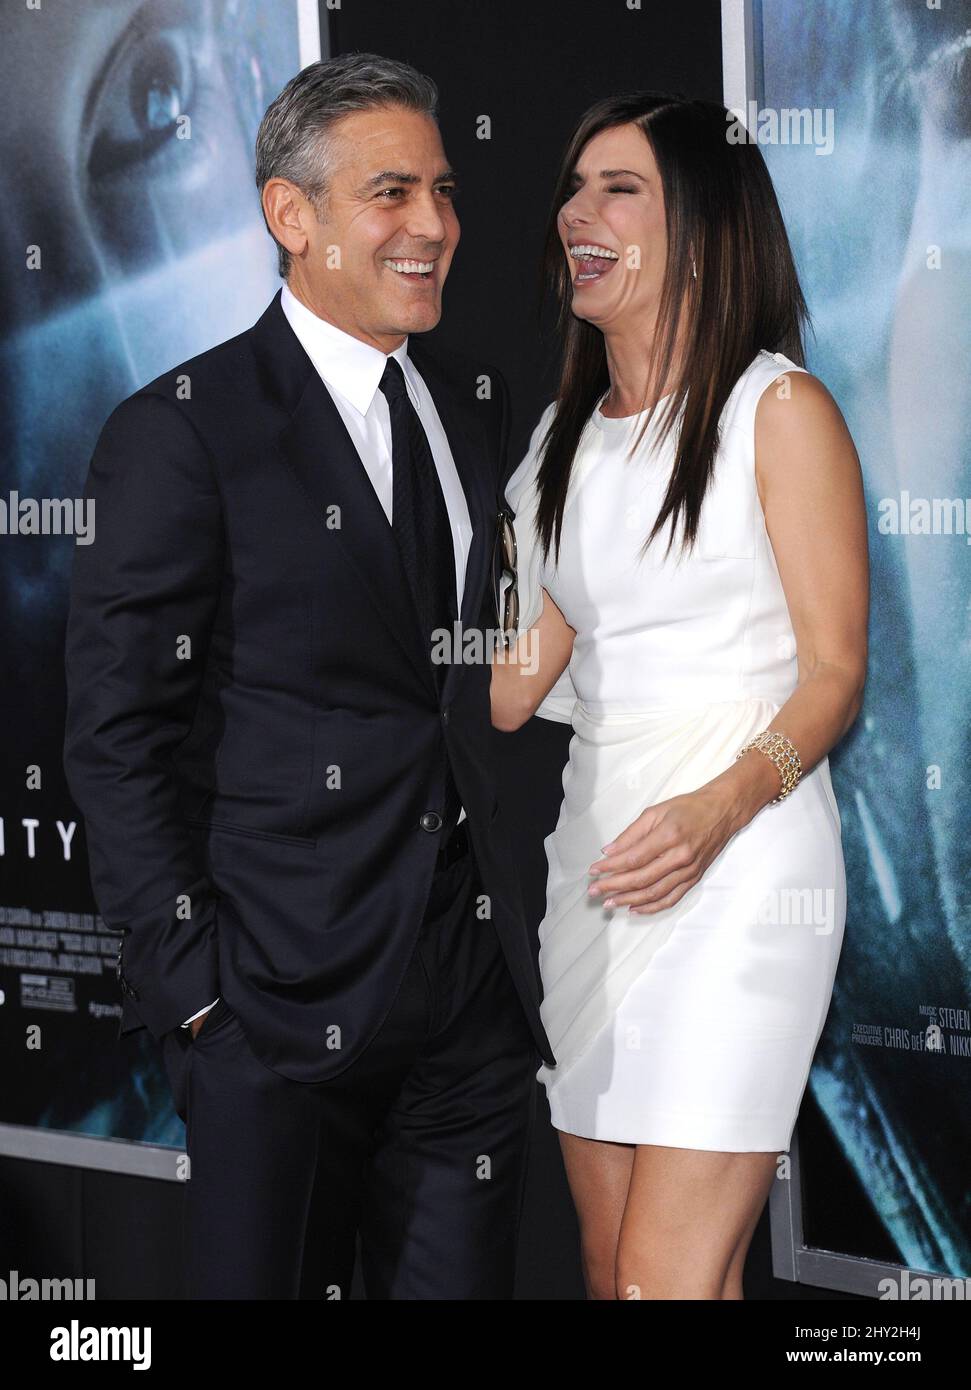 Sandra Bullock & George Clooney attending the 